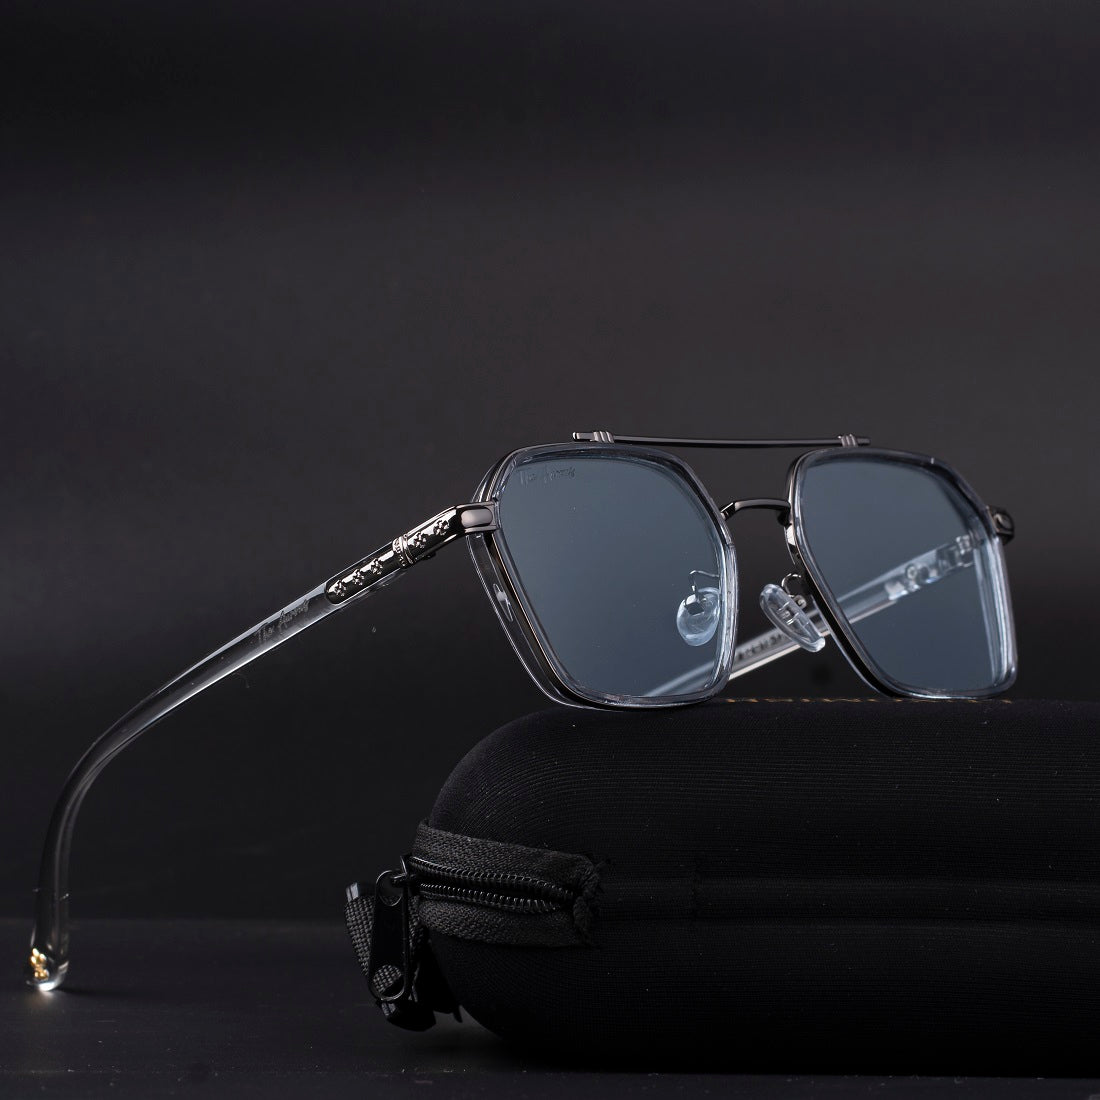 Photochromic Polarized Sunglasses from The Aurous